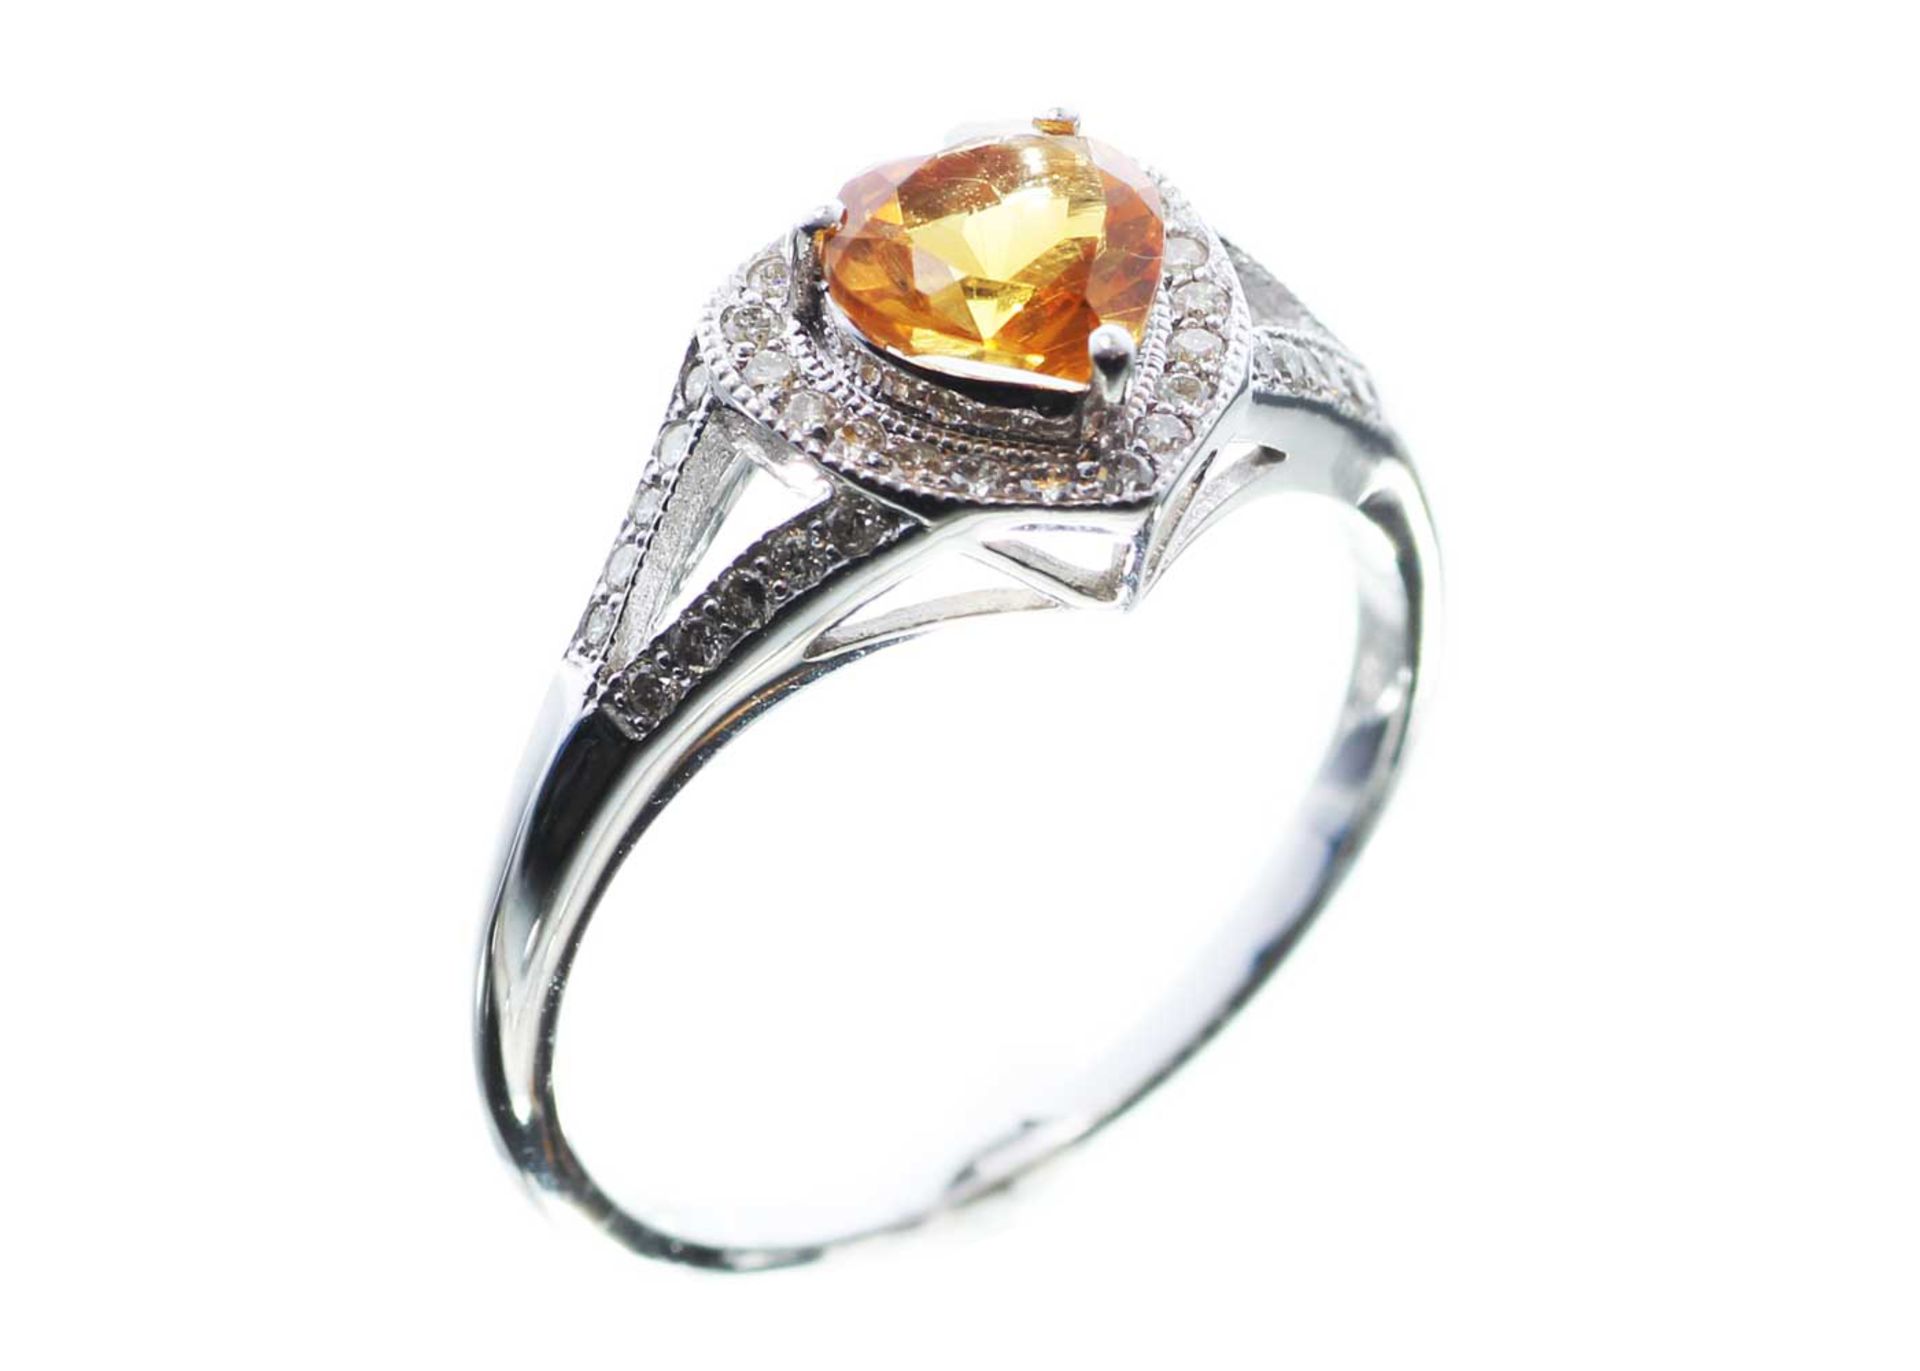 9ct White Gold Heart Shape Citrine Diamond Ring 0.20 Carats - Image 2 of 4